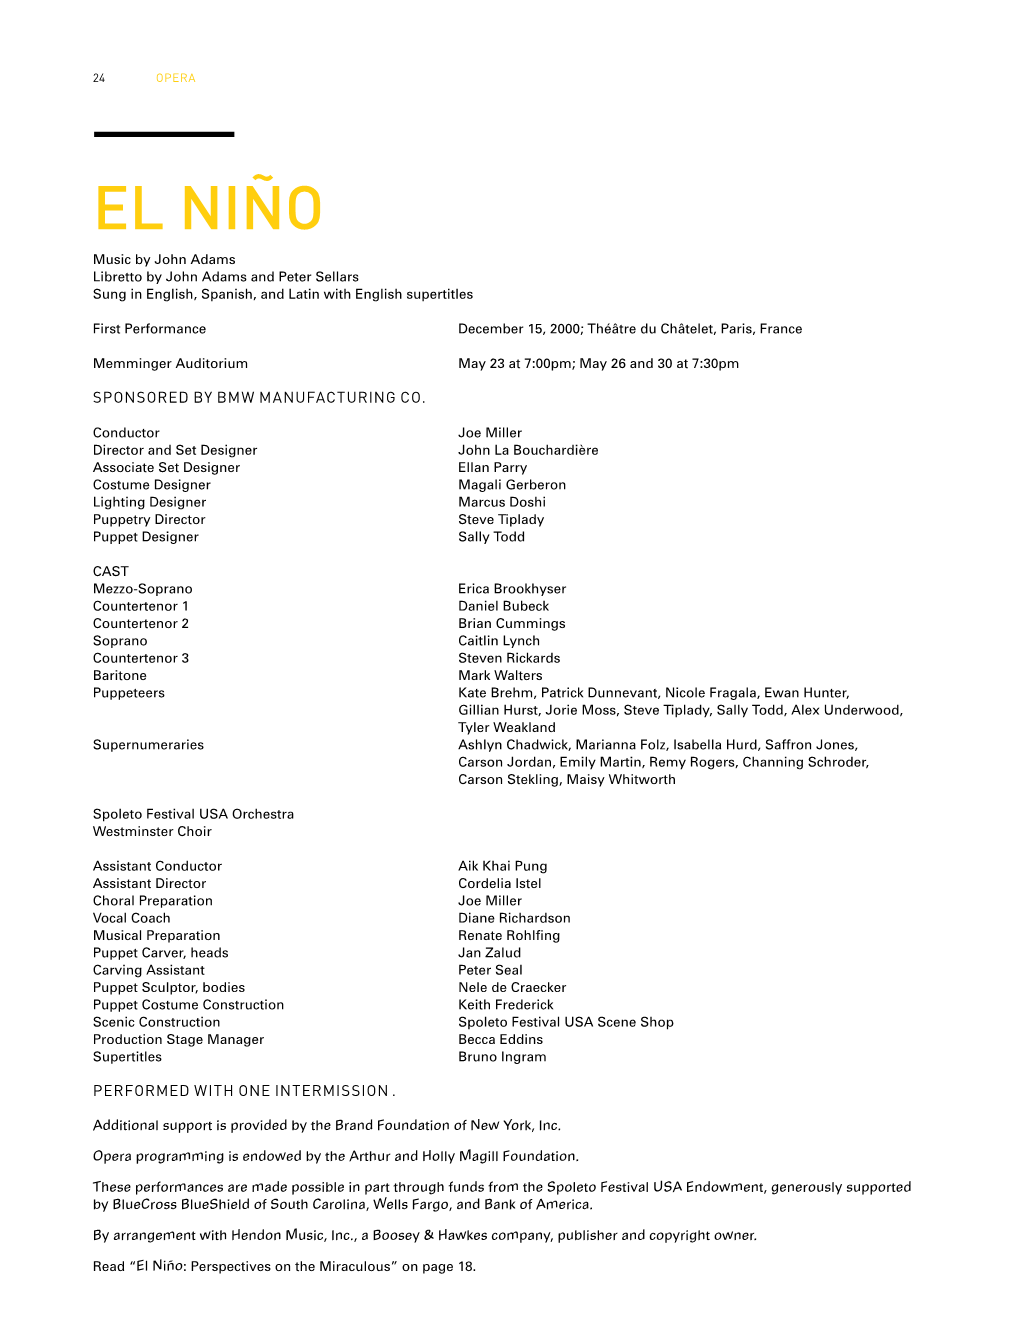 EL NIÑO Music by John Adams Libretto by John Adams and Peter Sellars Sung in English, Spanish, and Latin with English Supertitles